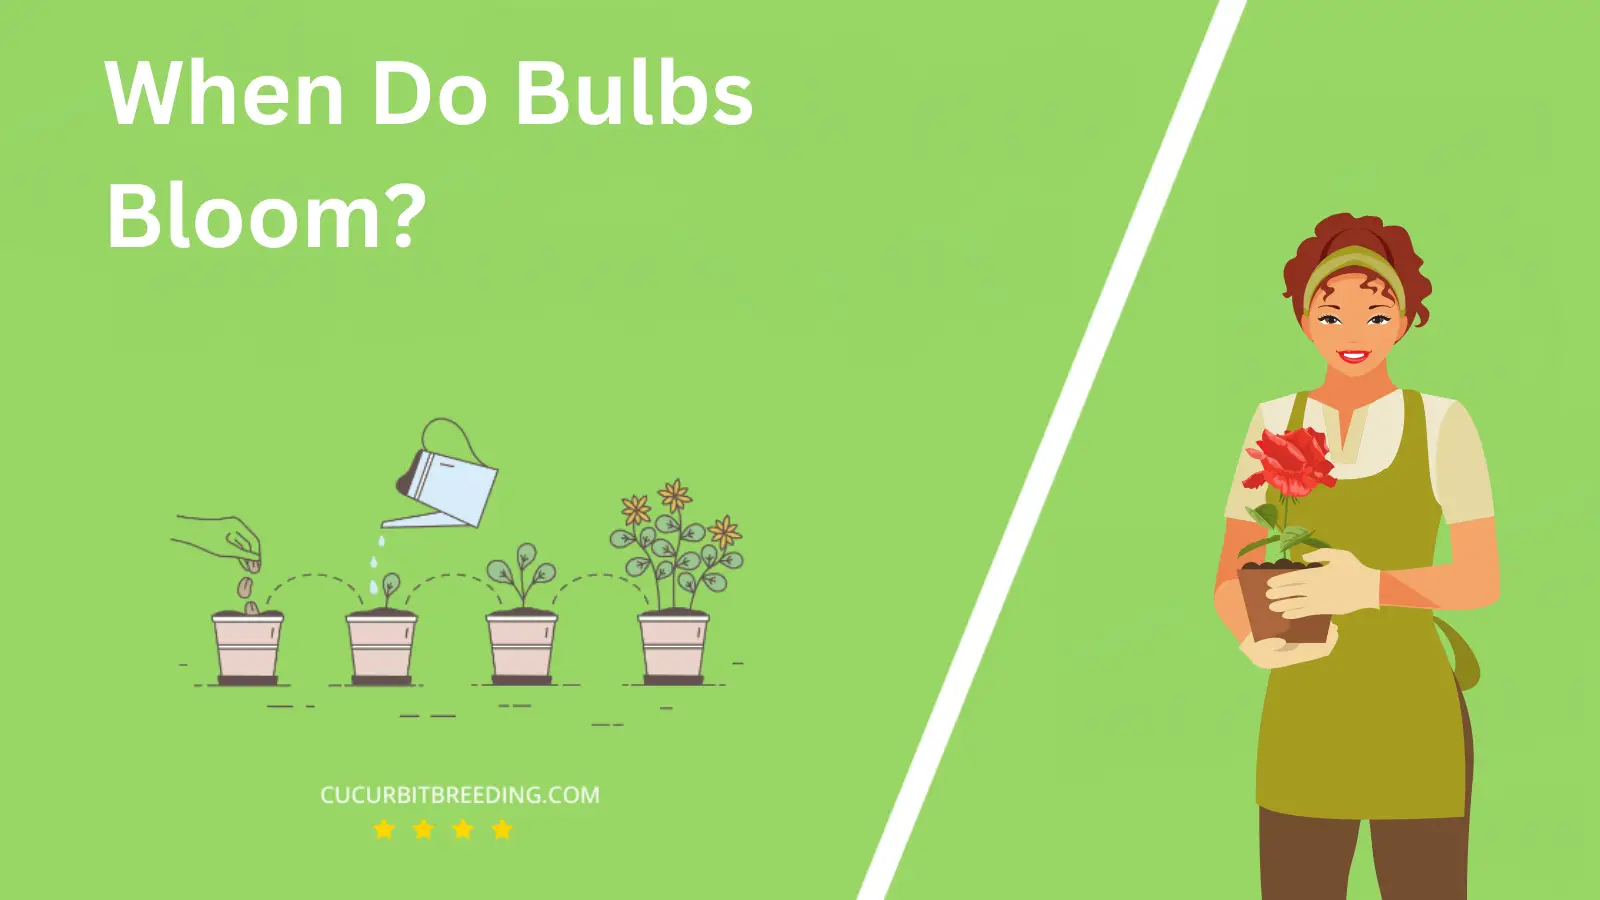 When Do Bulbs Bloom?